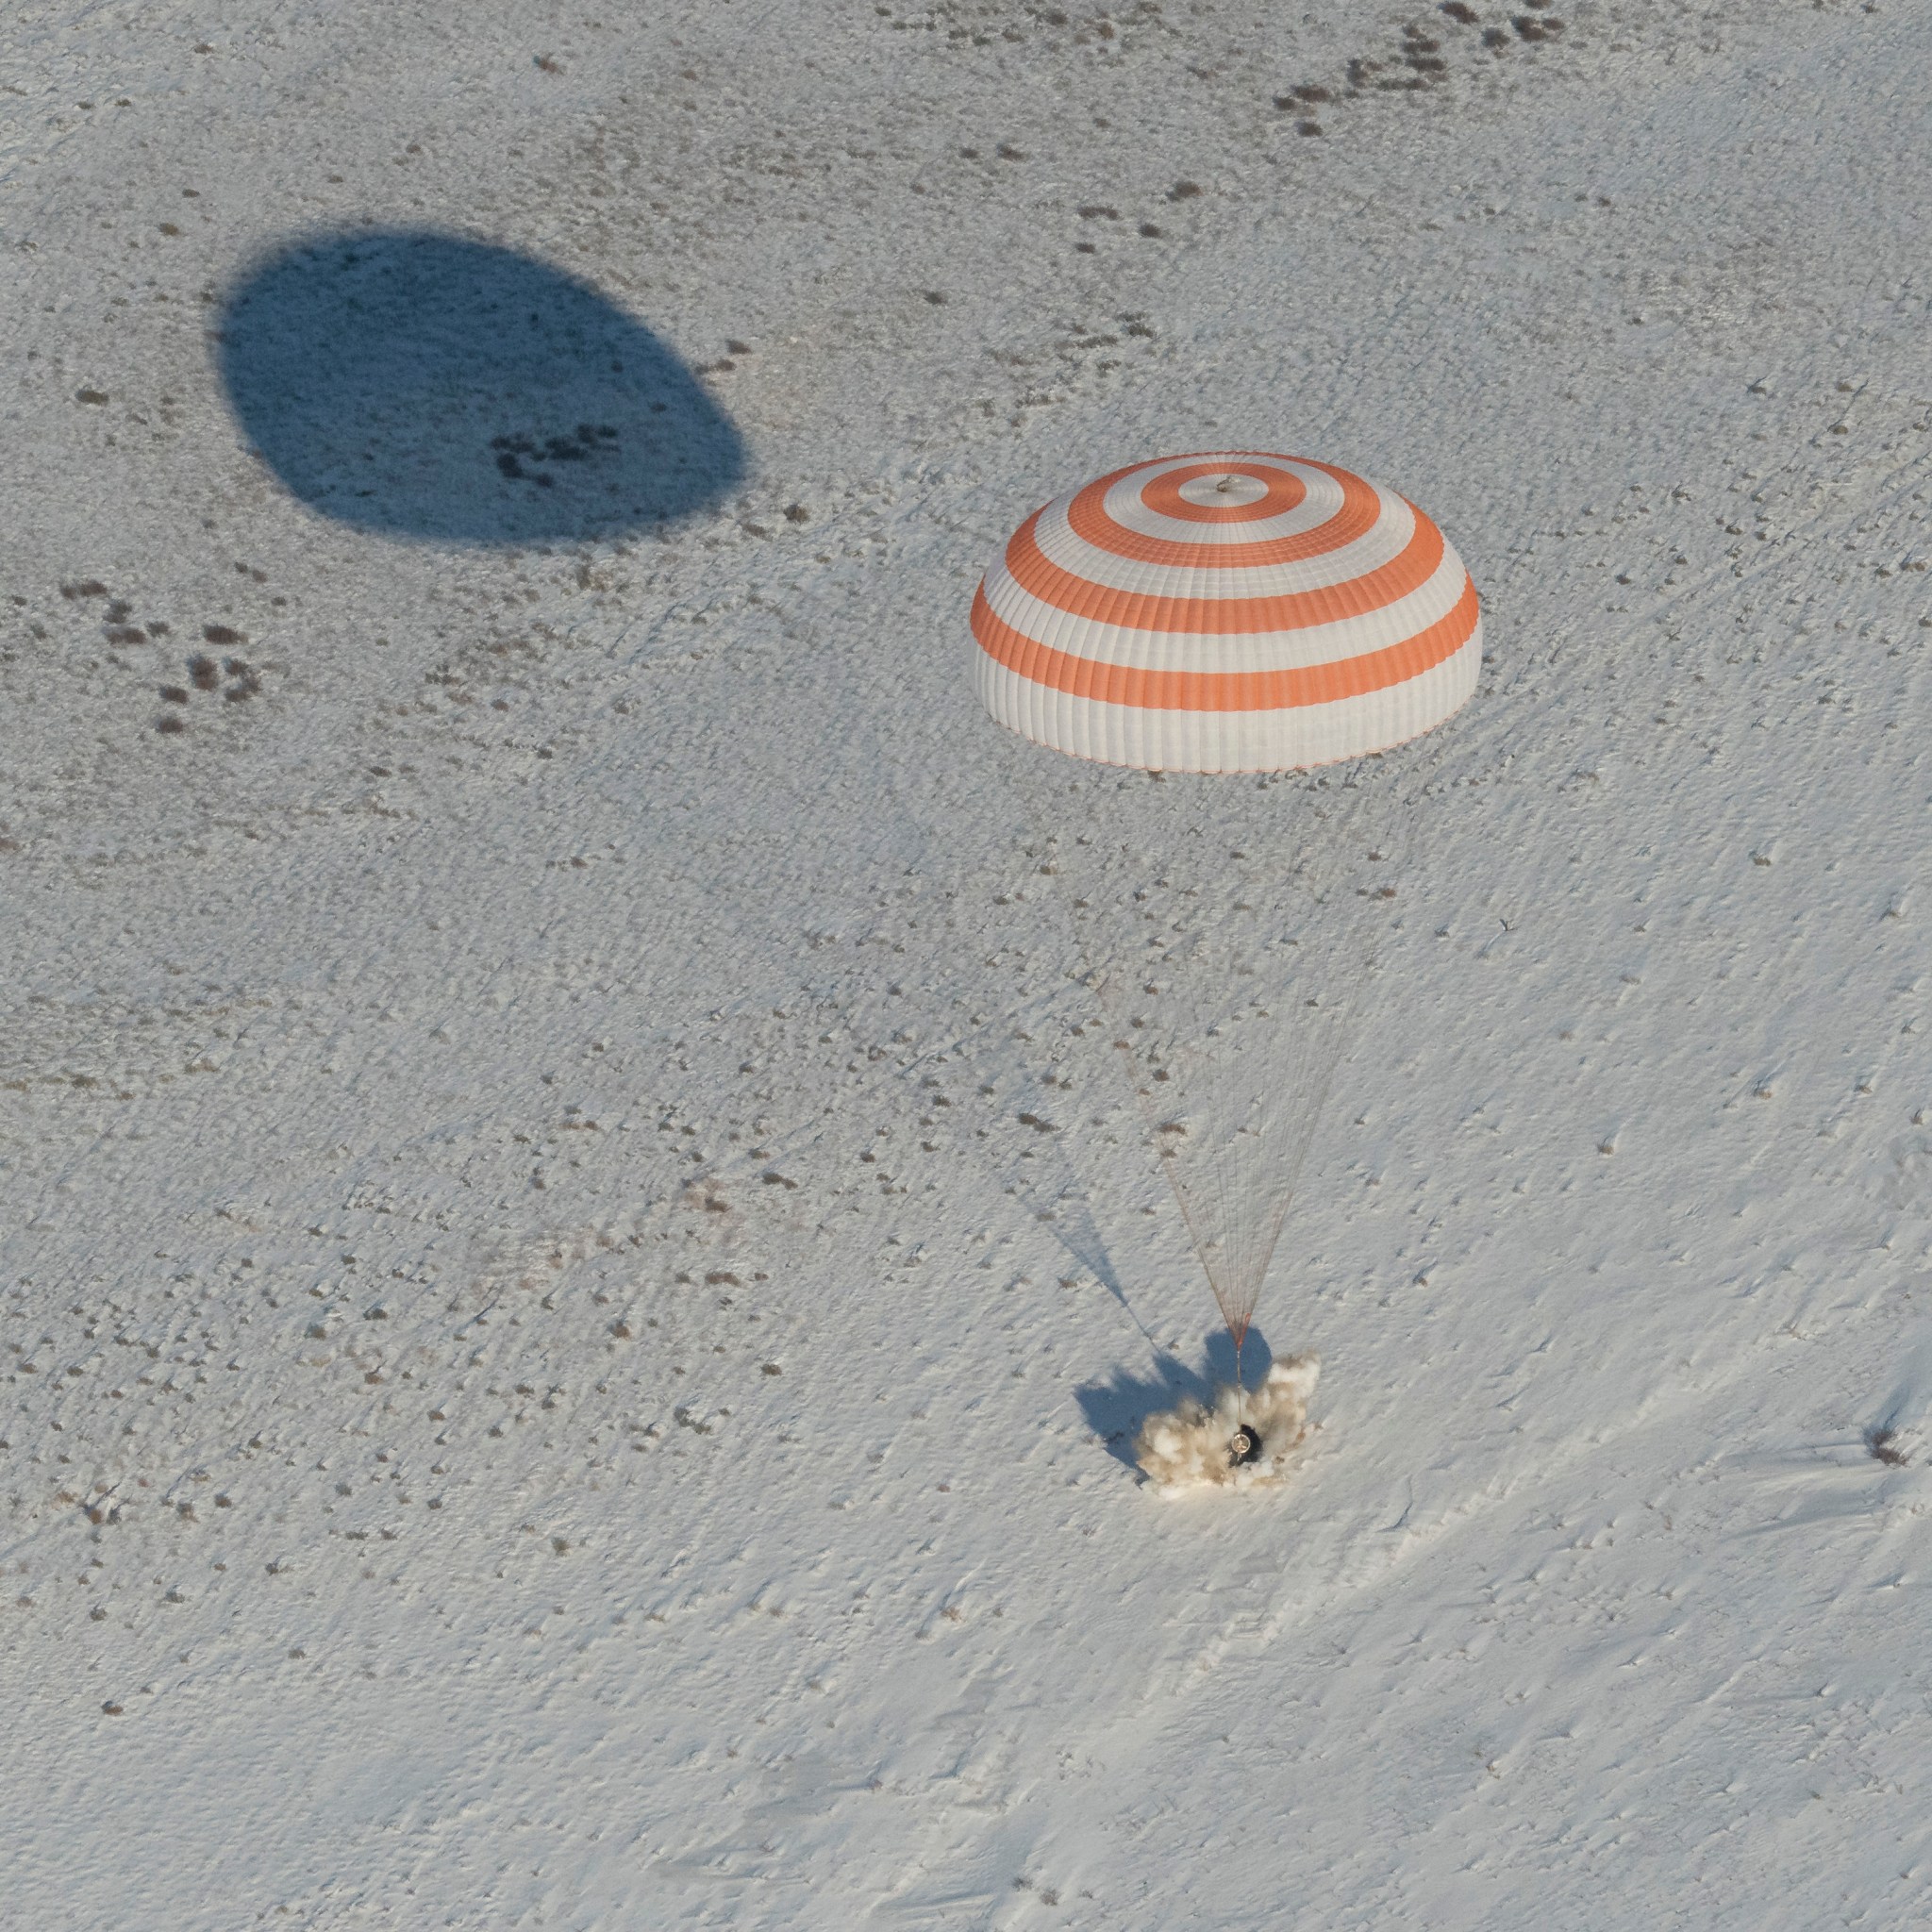 Expedition 53 Landing in Kazakhstan